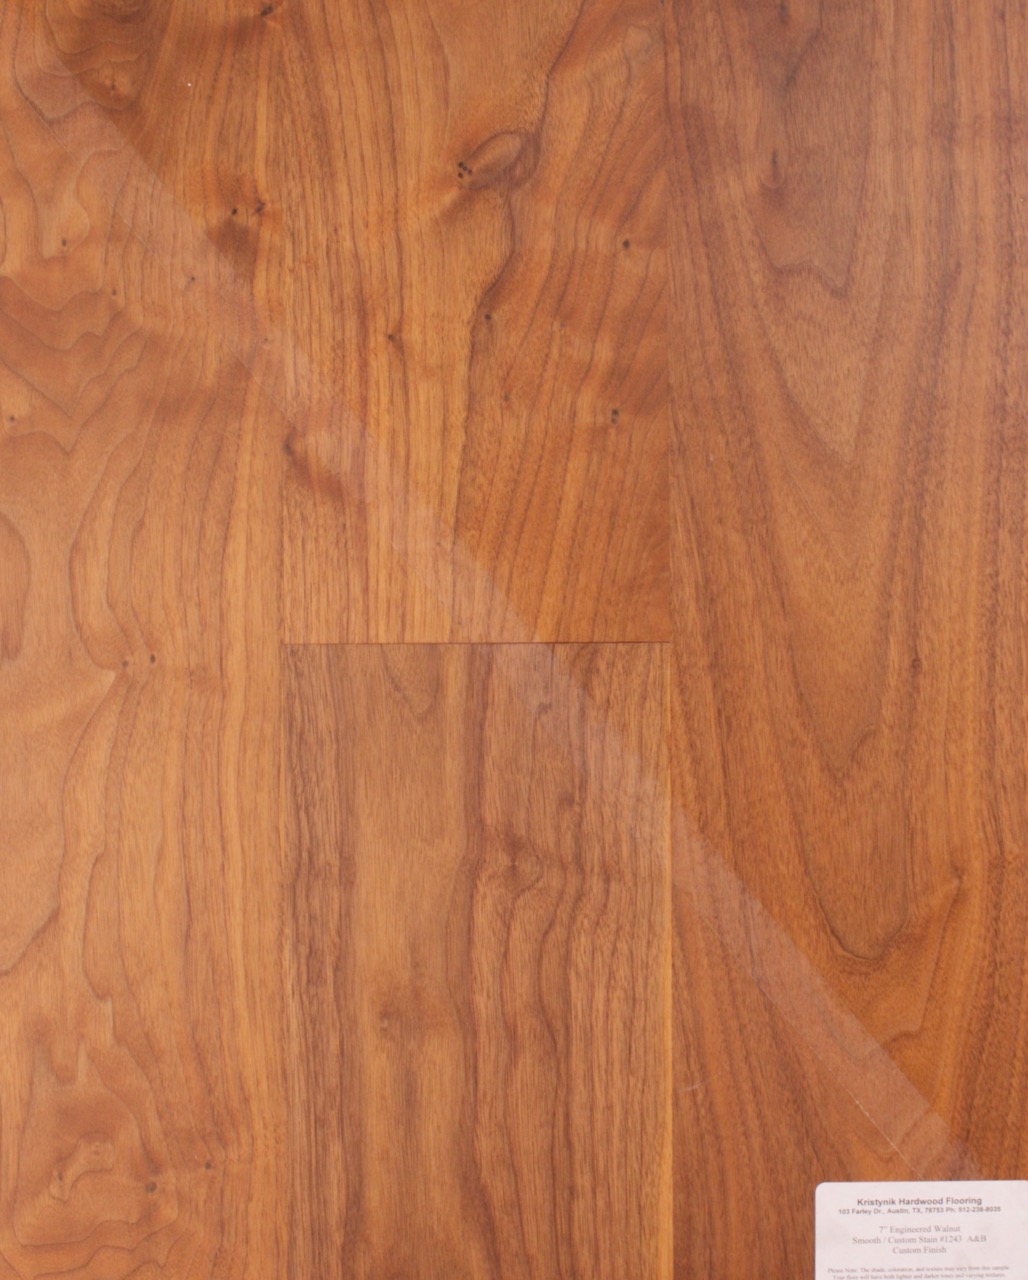 Kristynik Hardwood Flooring Austin Texas, Brazilian Mesquite Hardwood Flooring